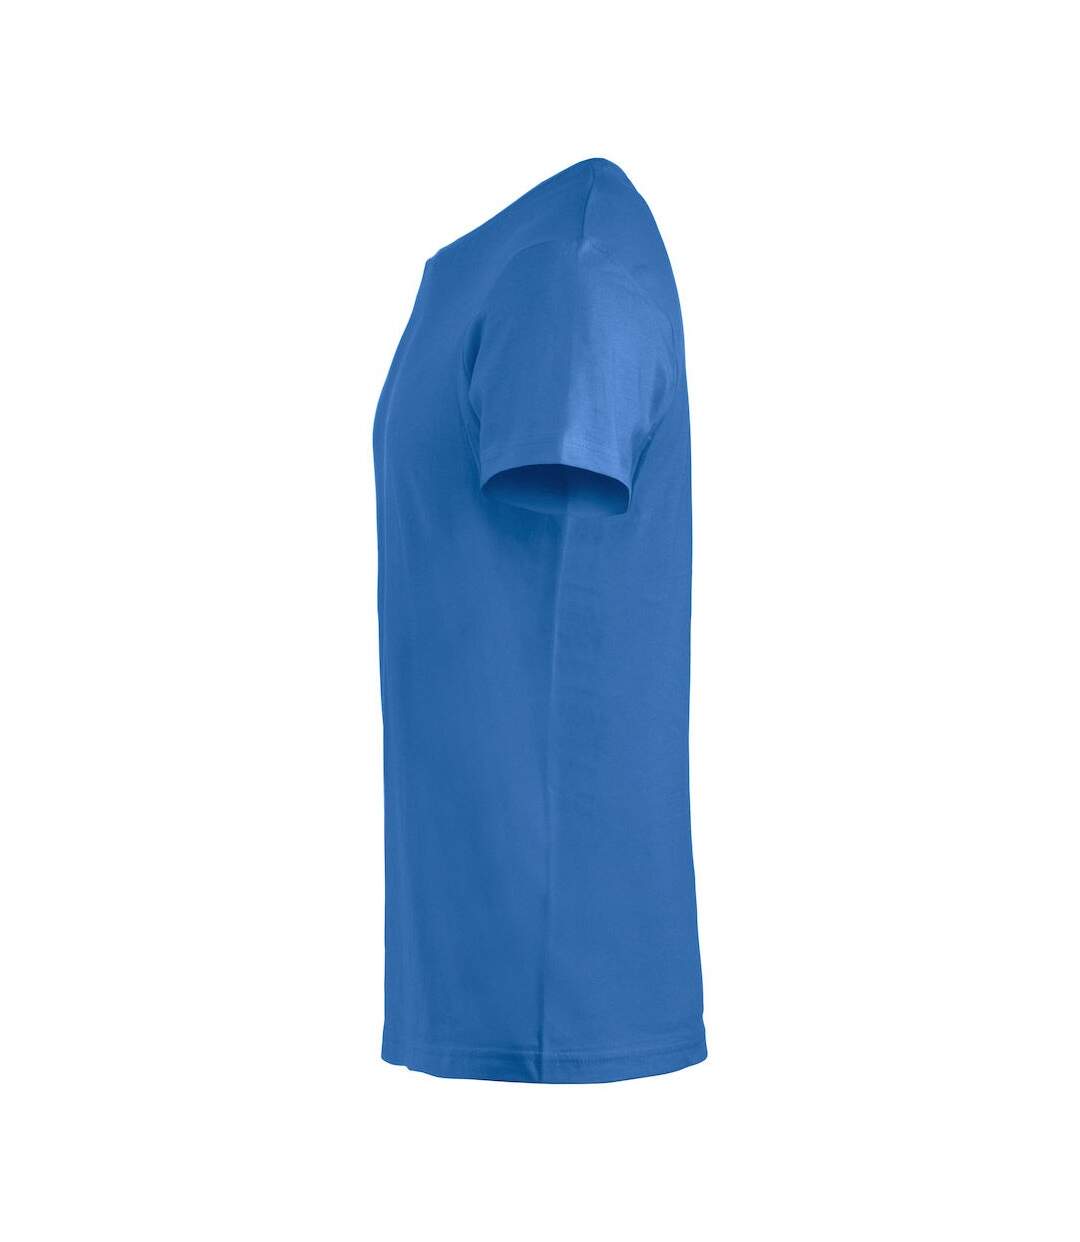 Clique Mens Basic T-Shirt (Royal Blue)